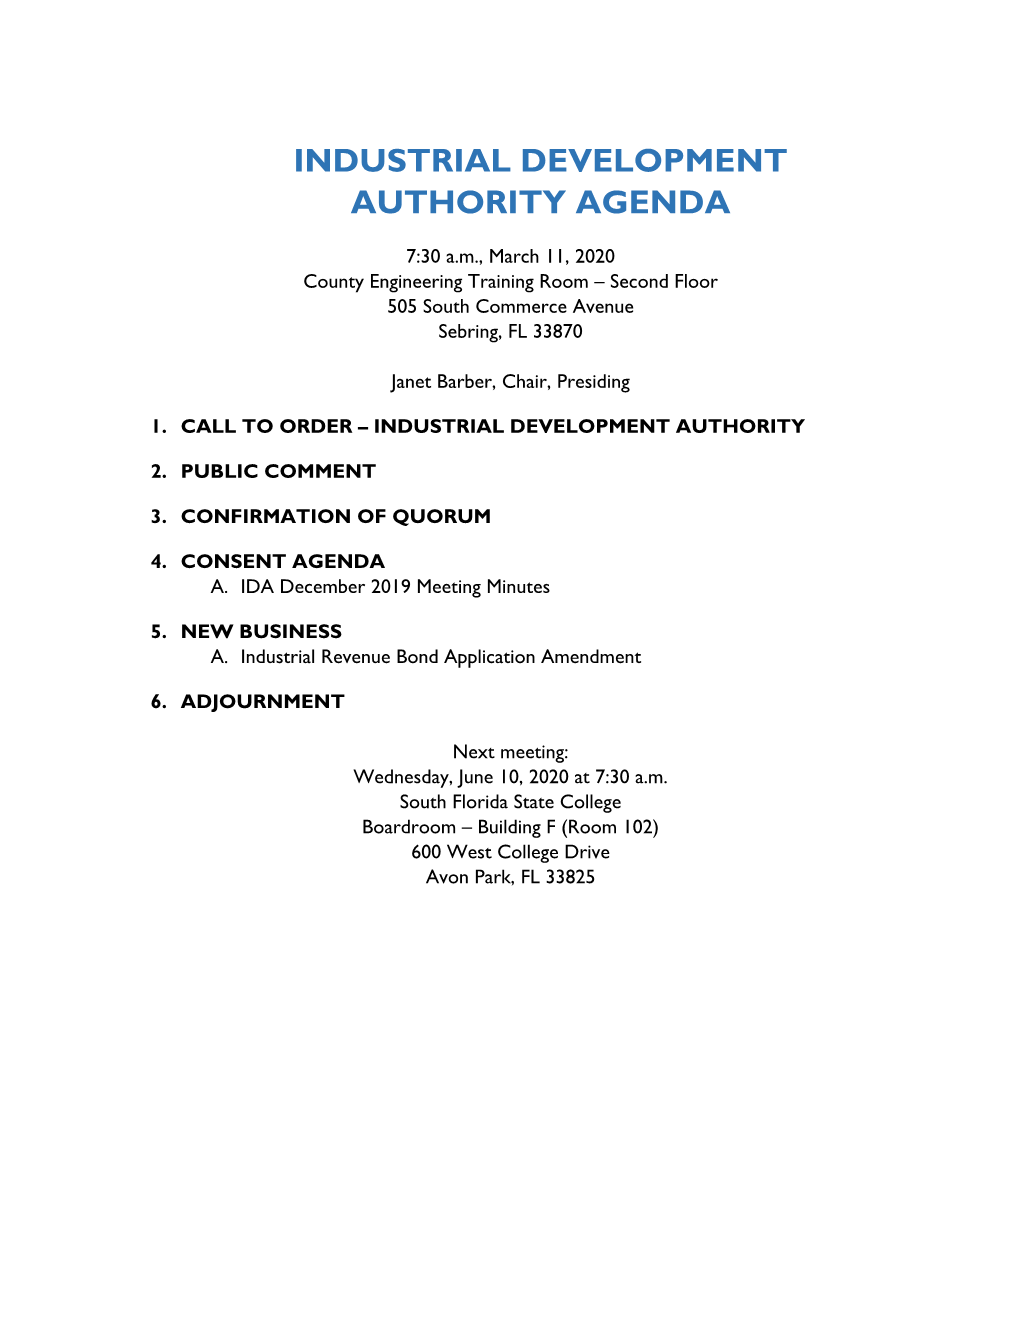 Industrial Development Authority Agenda